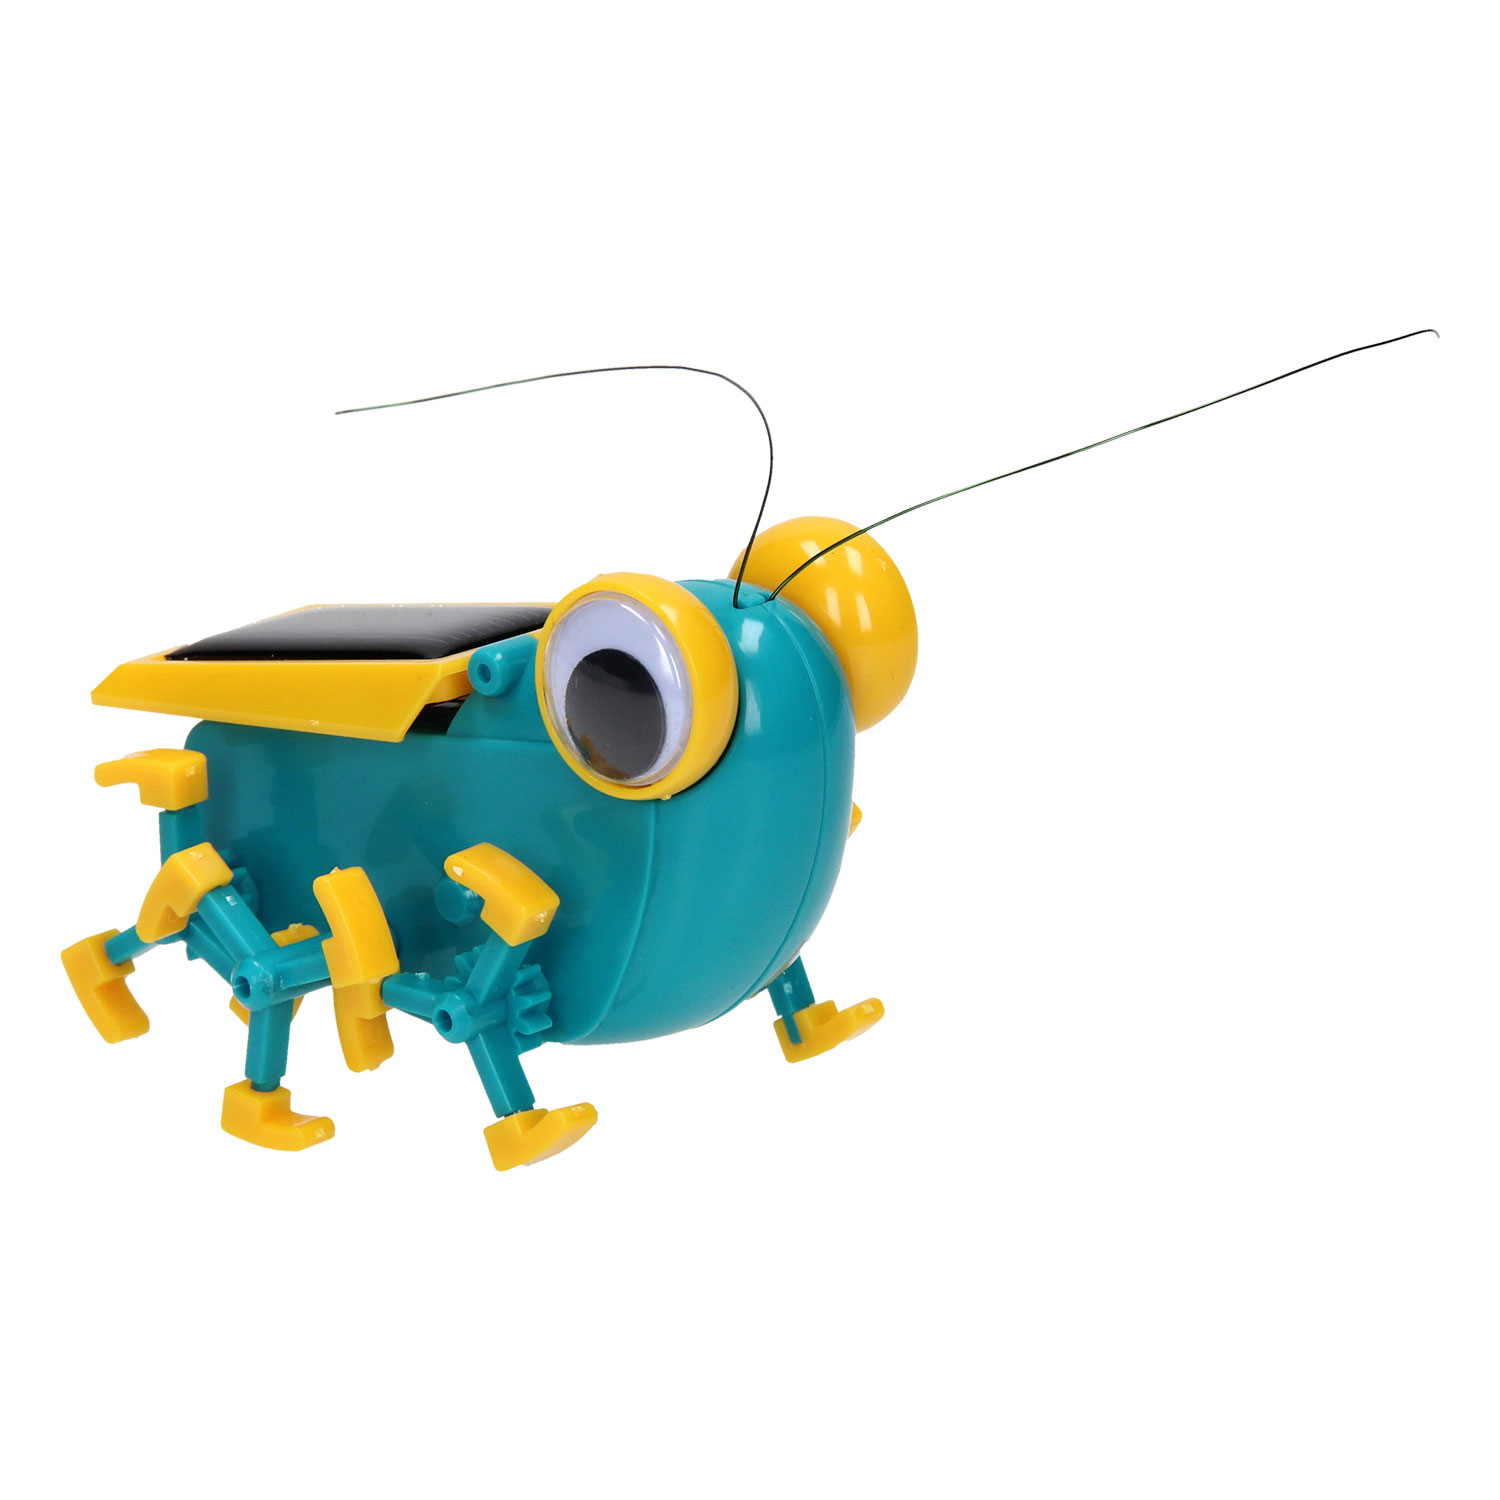 Experimenten - Solar Robot Insect, 16dlg.